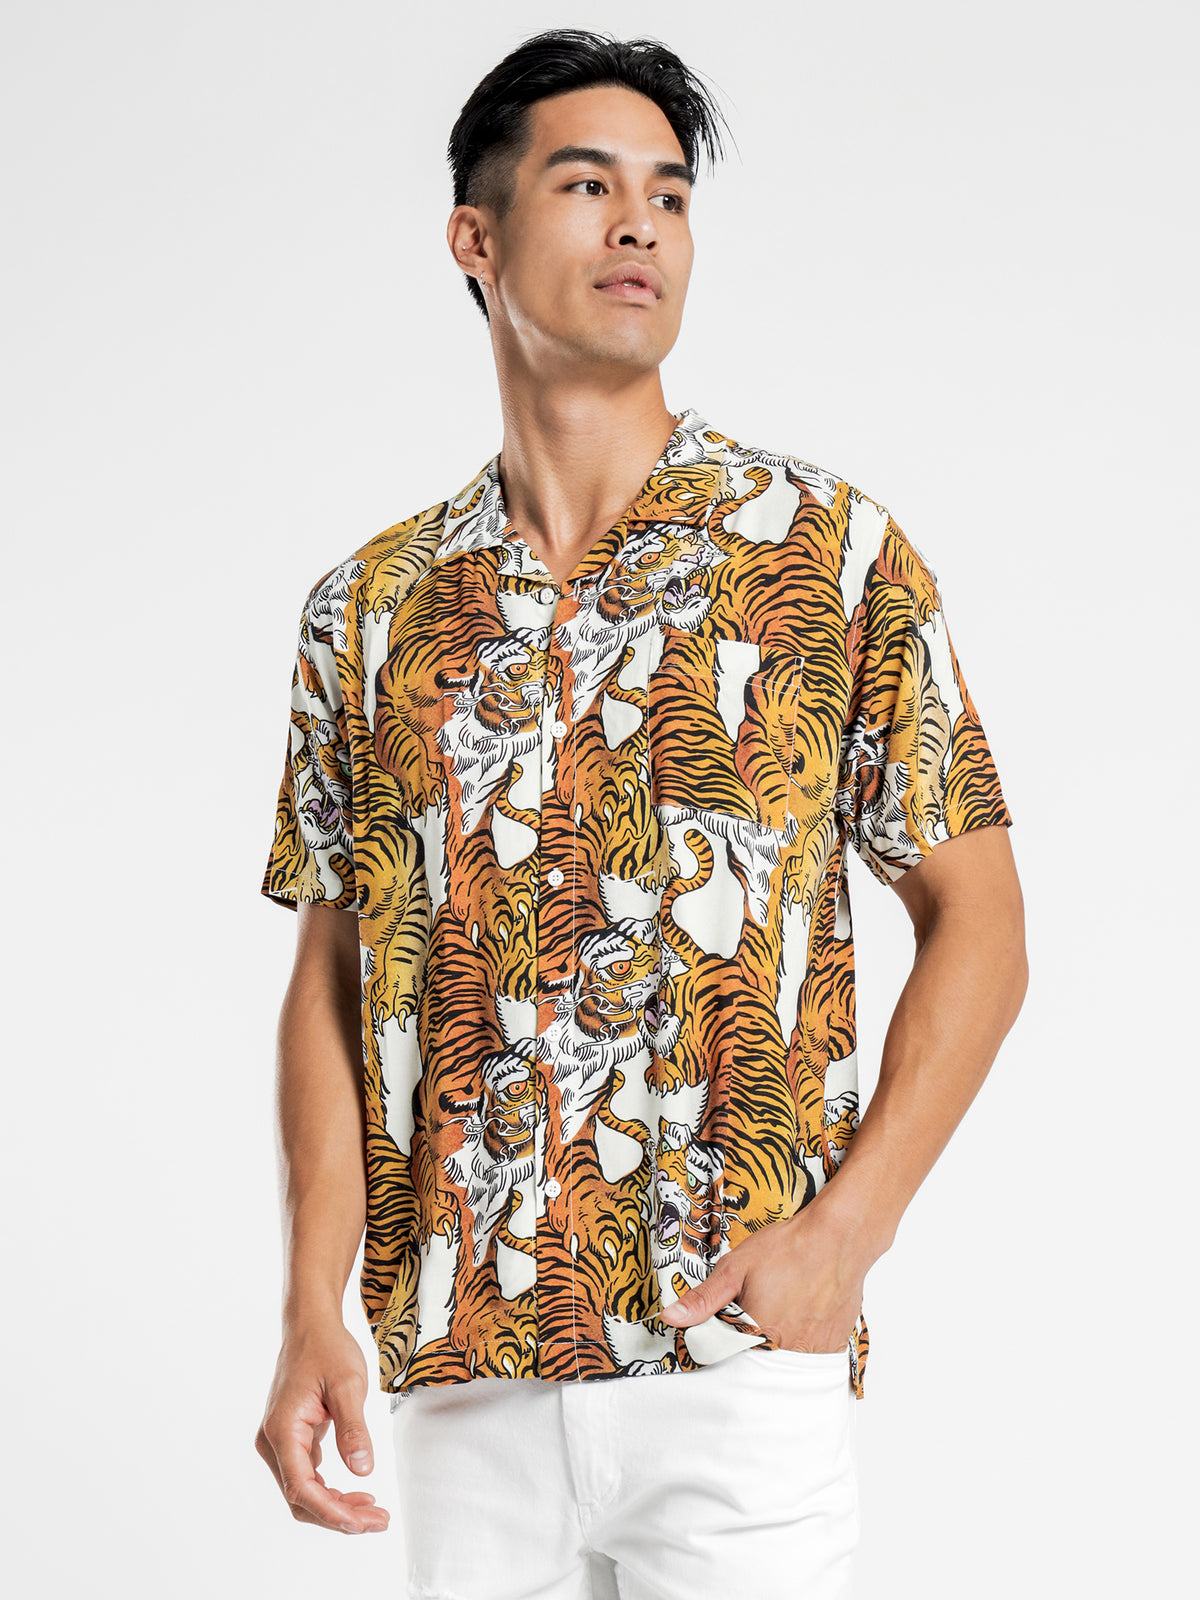 Fiasco Short Sleeve Shirt in Orange Tiger Print